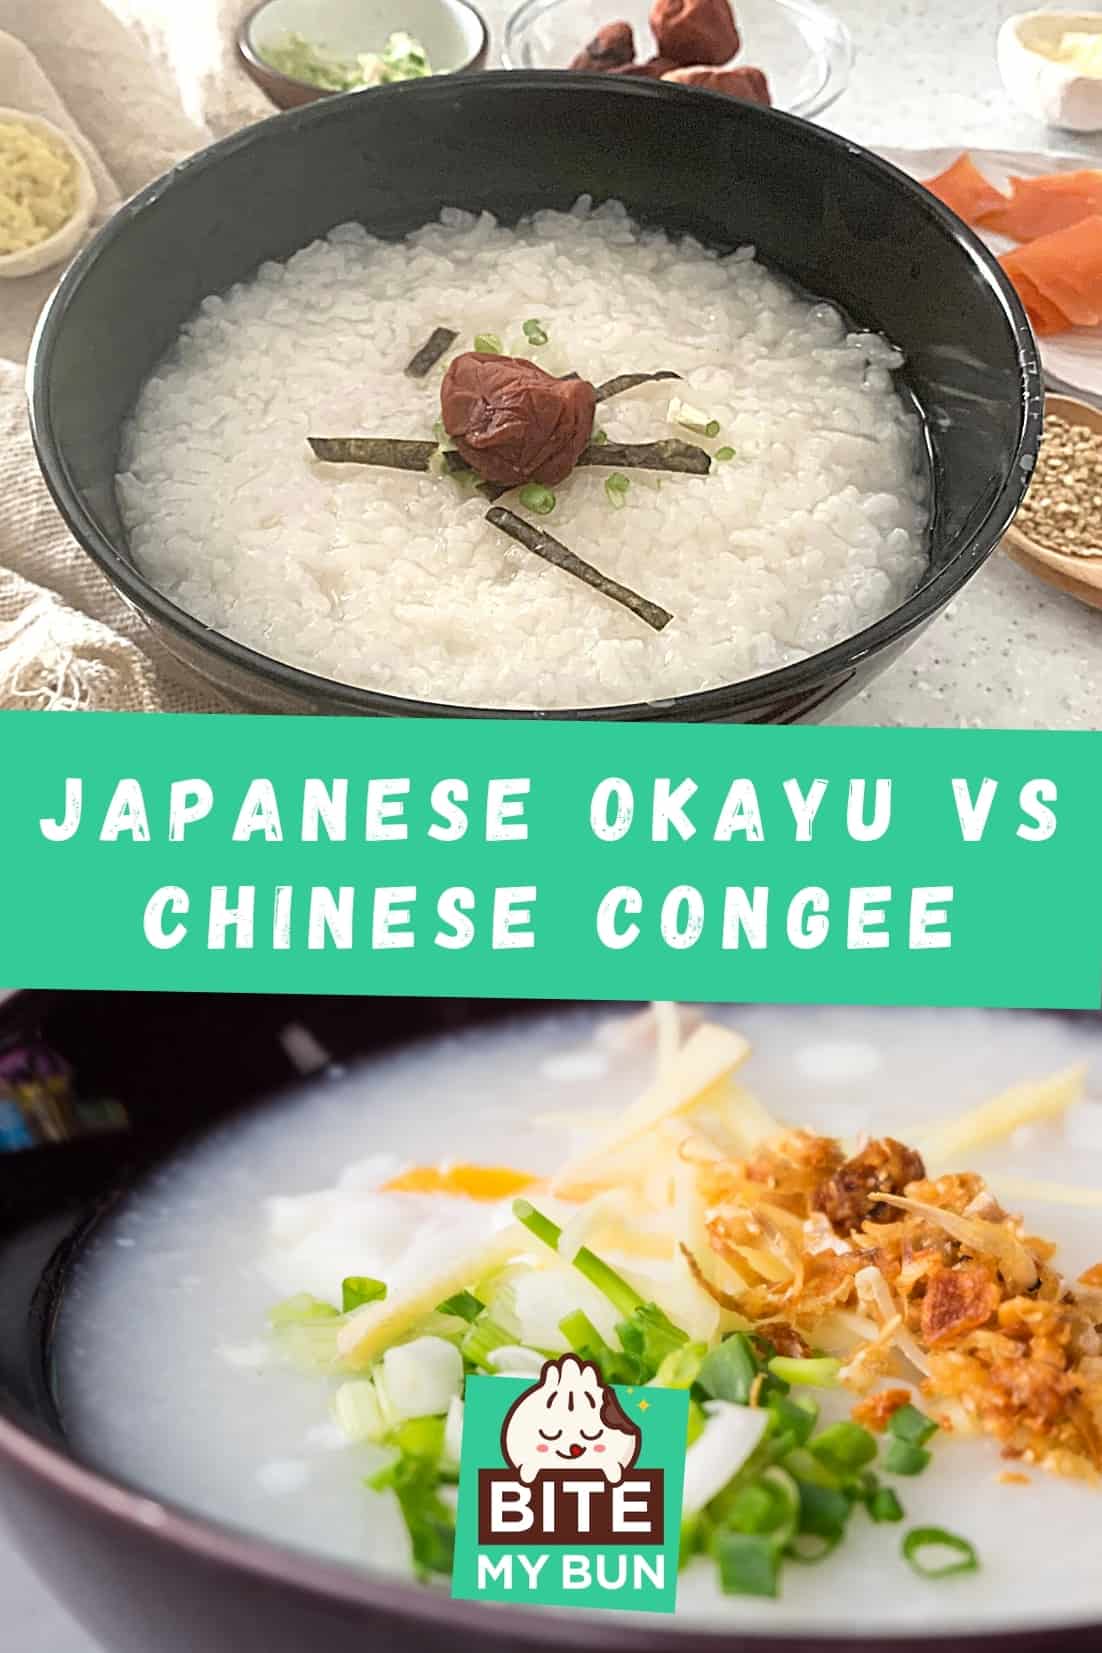 Japanese okayu vs Chinese congee